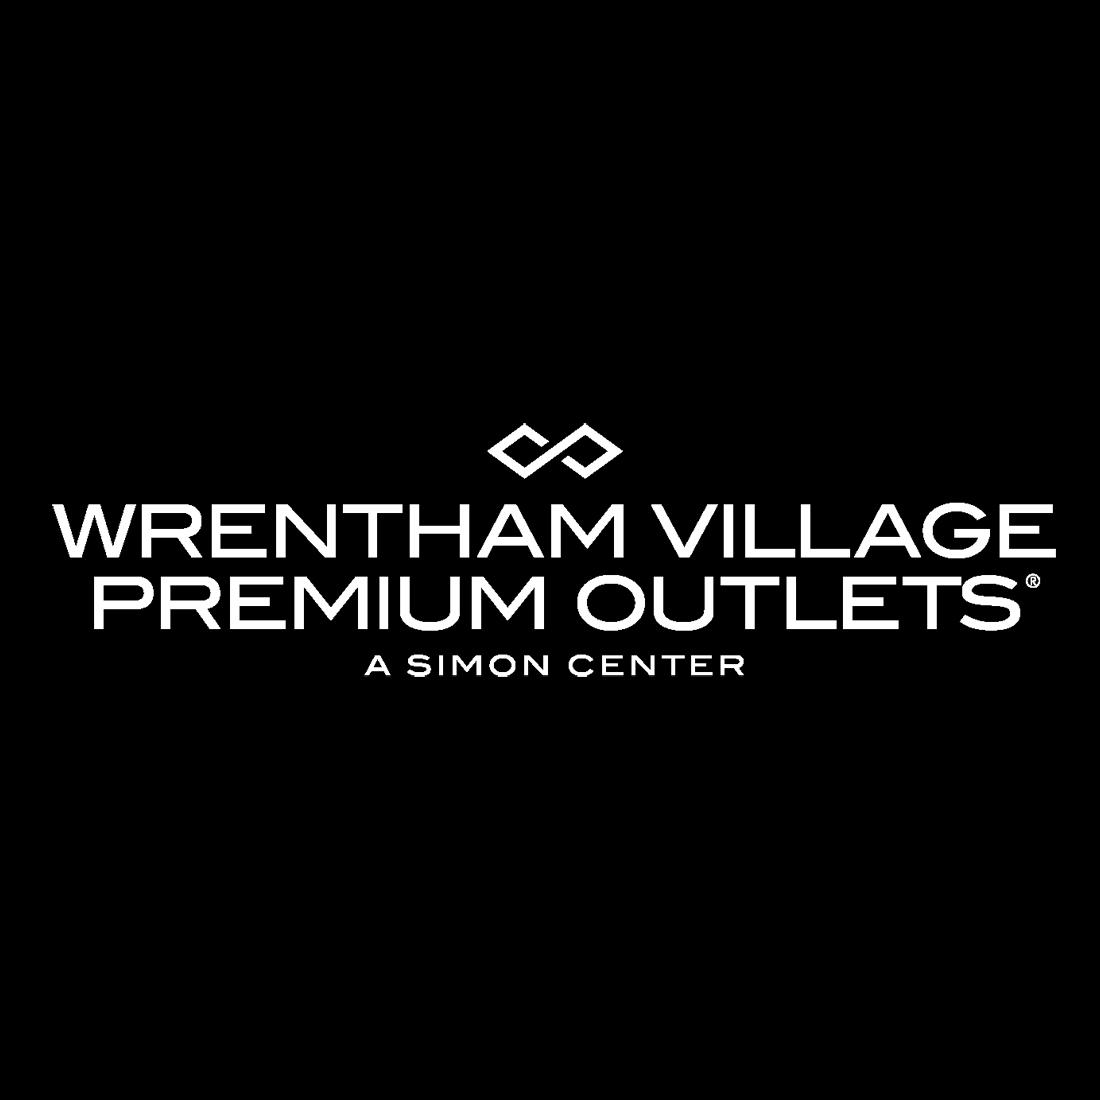 Wrentham Village Premium Outlets - Wrentham, MA - Business Profile